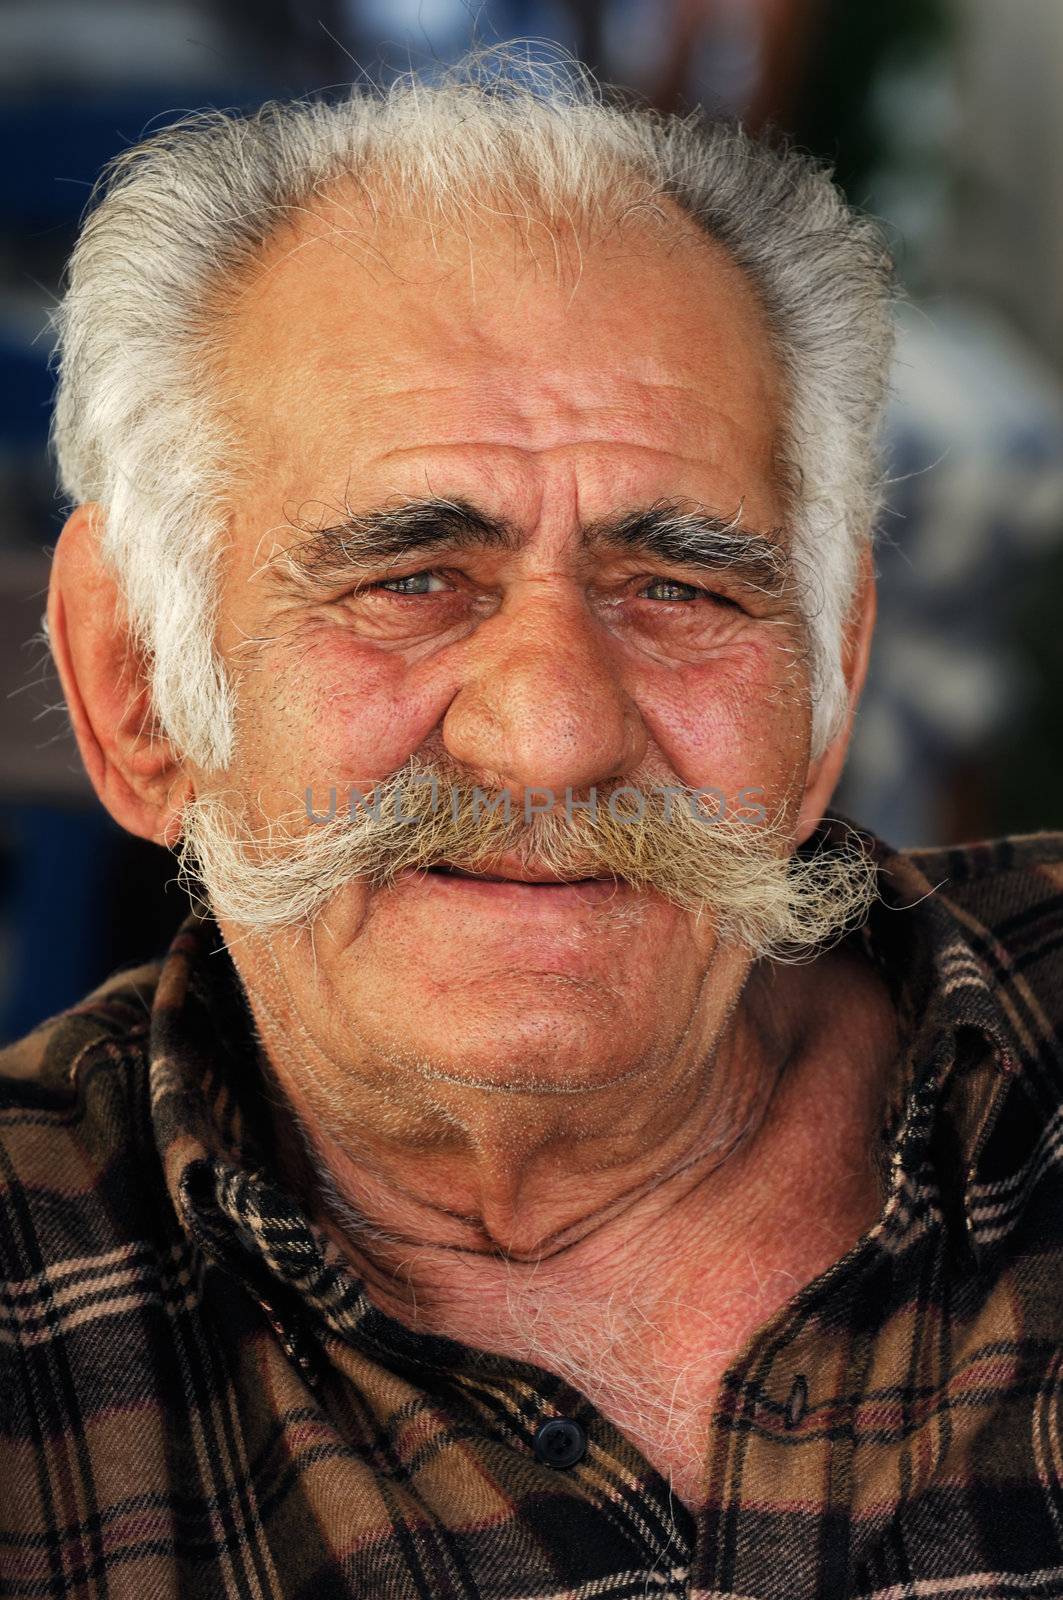 Senior Greek man with a big mustache by akarelias